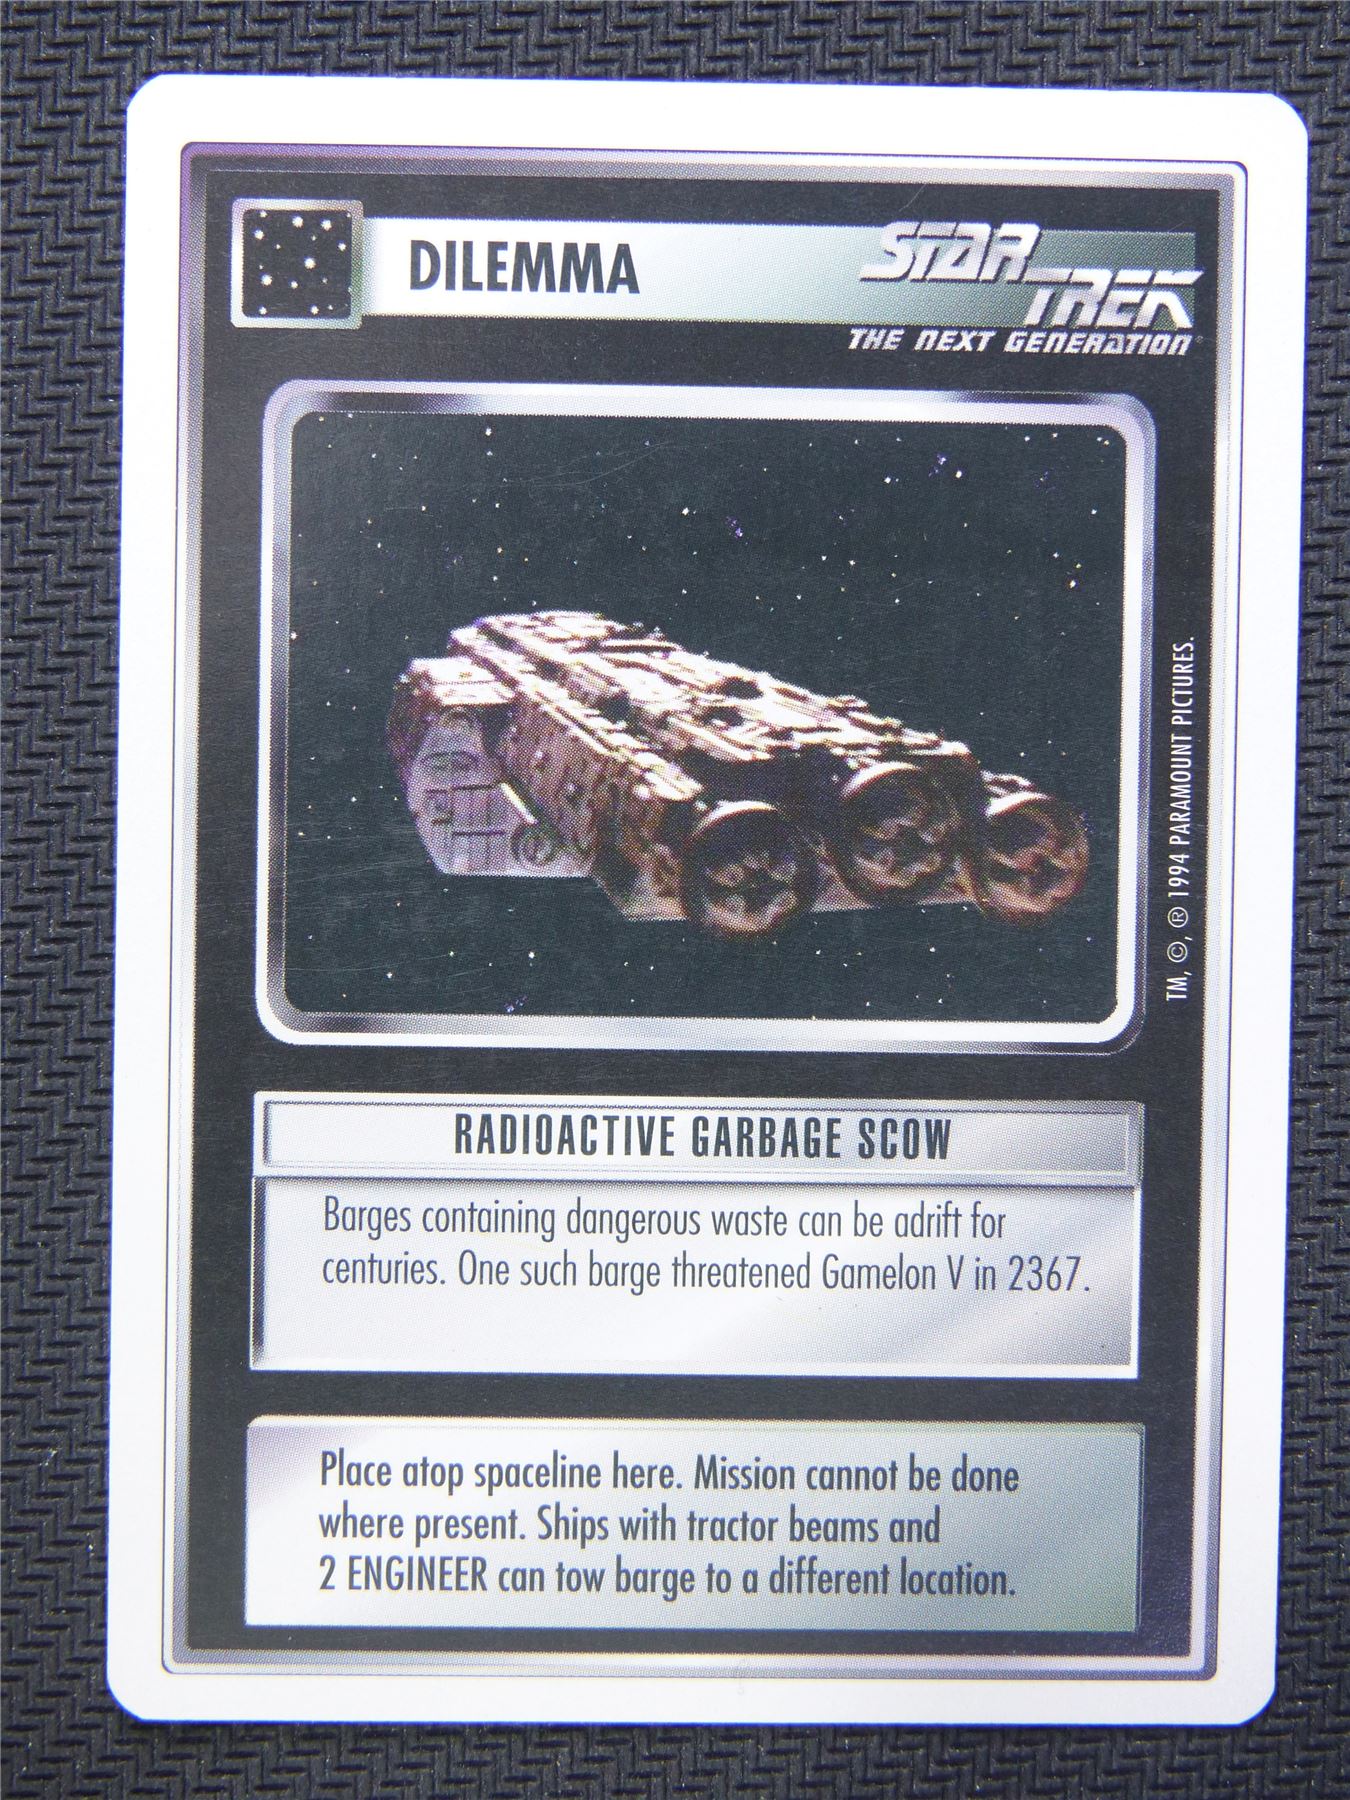 Dilemma Radioactive Garbage Scow - Star Trek CCG Next Gen #4Y7